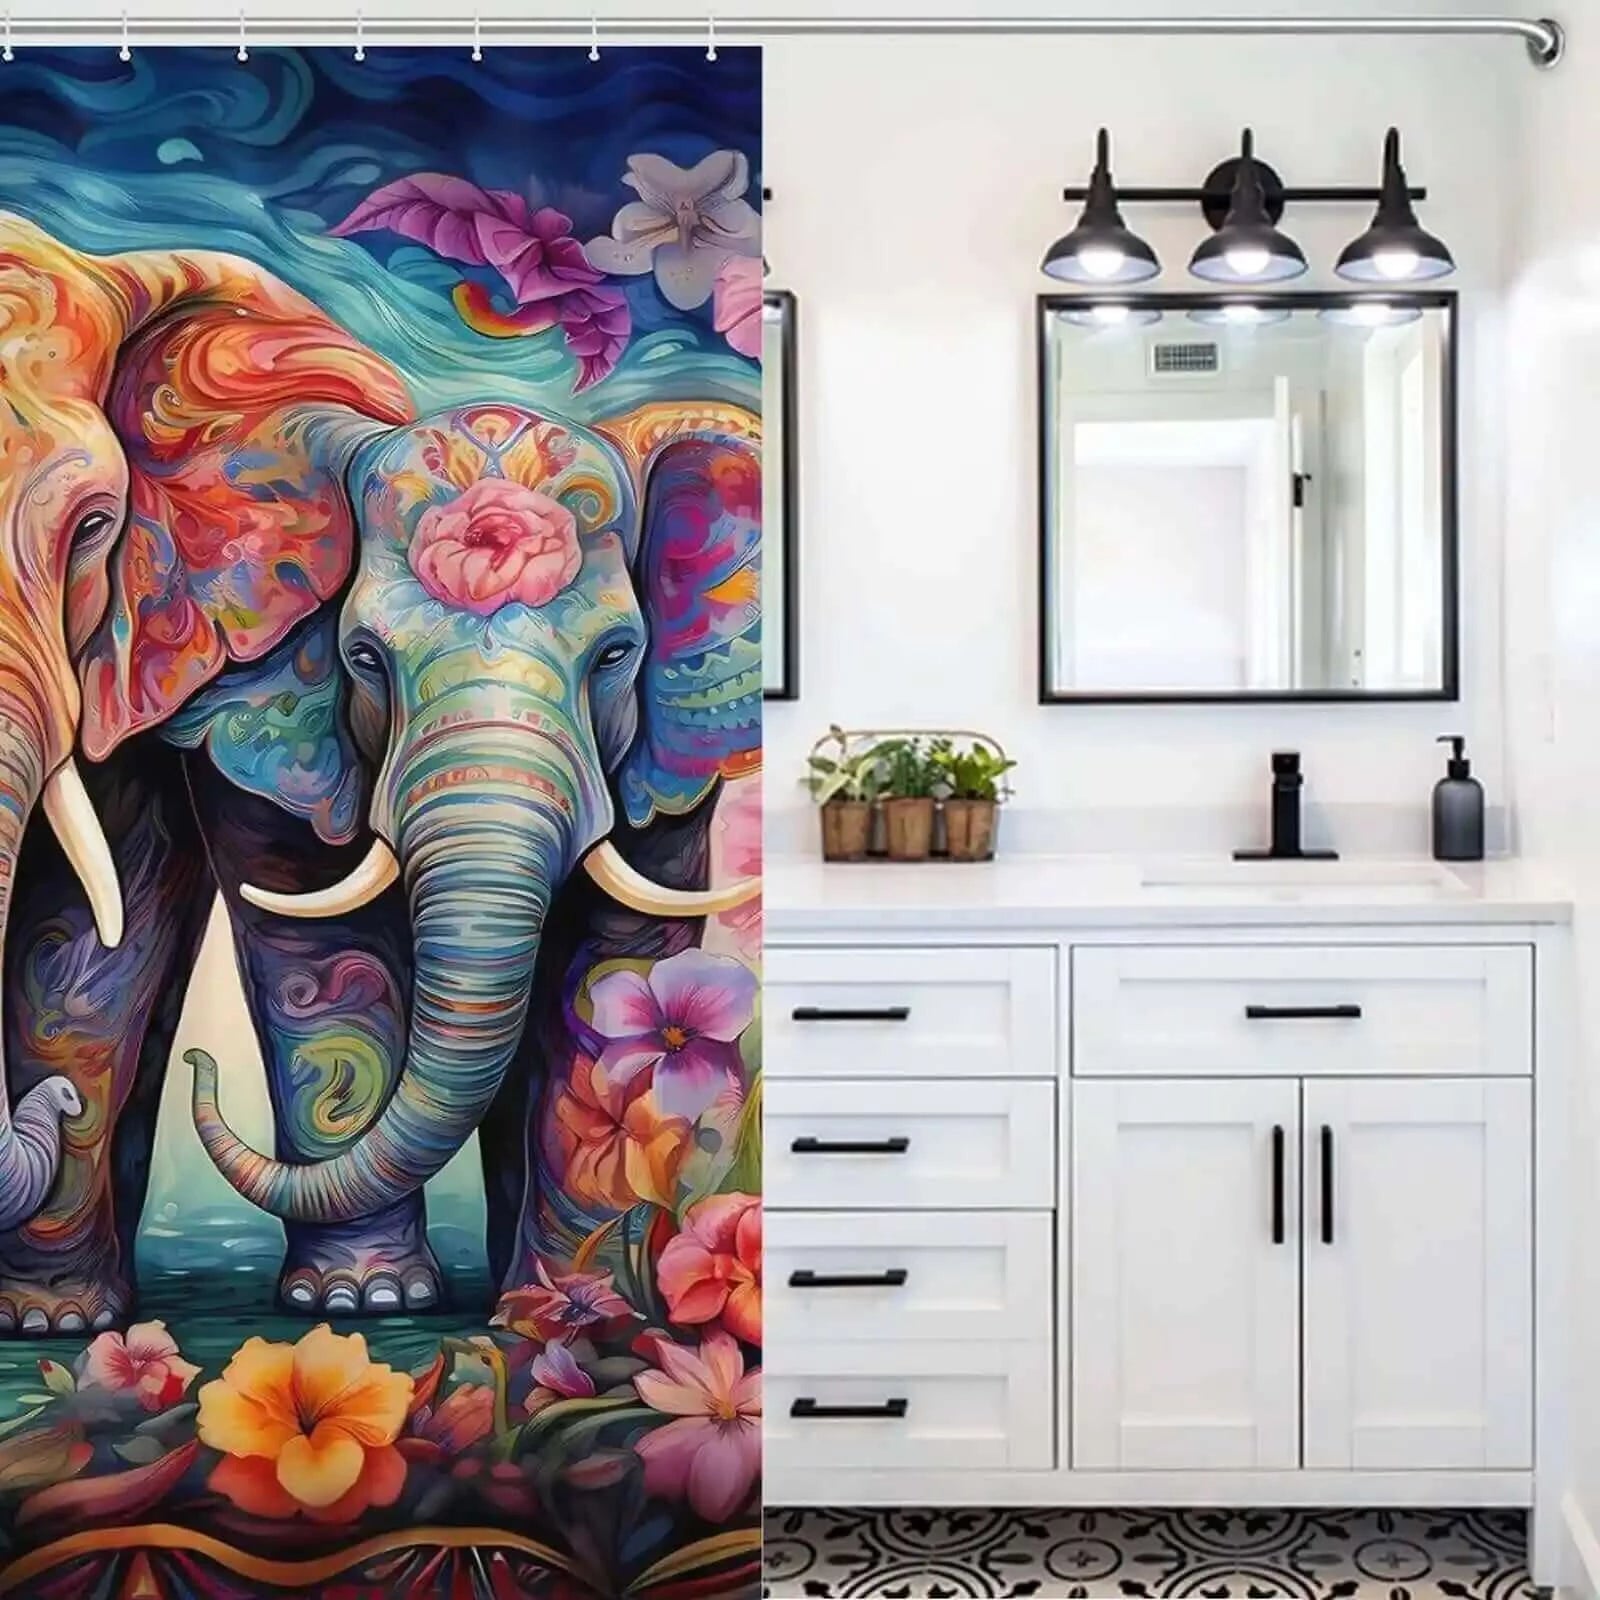 A 3D Watercolor Elephant Shower Curtain-Cottoncat featuring a colorful elephant by Cotton Cat.